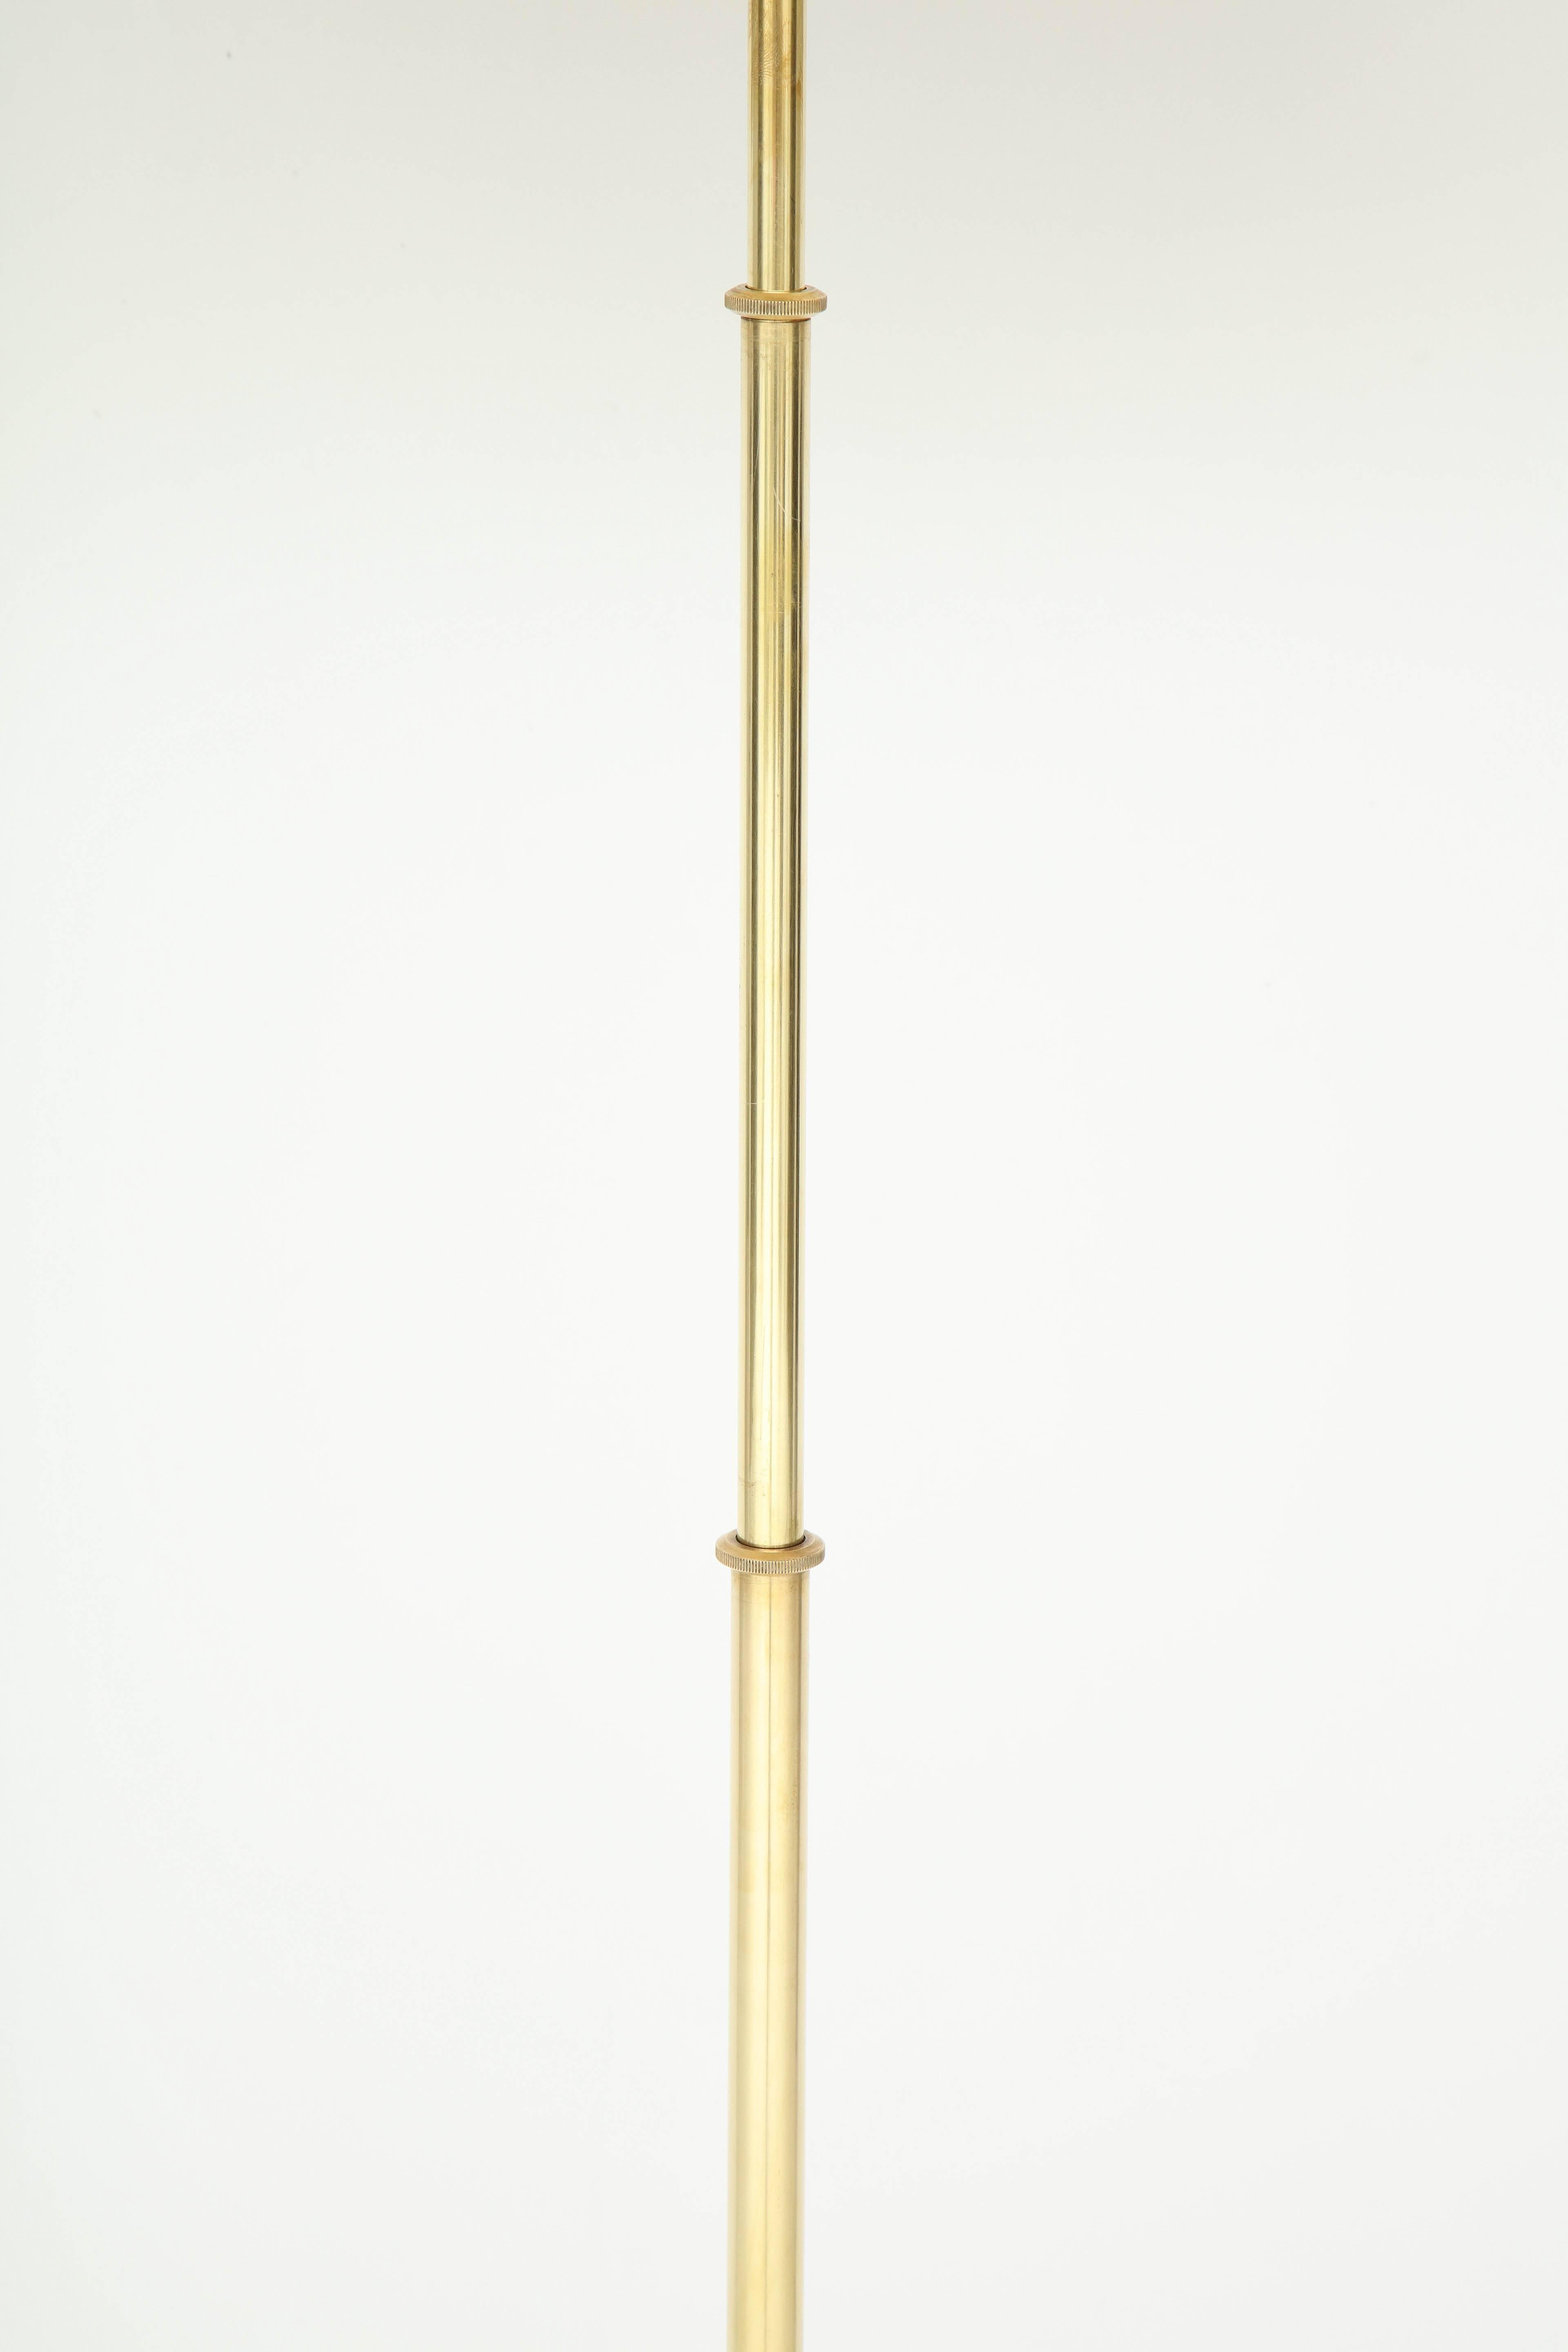 Danish Telescopic Brass Table or Floor Lamp, circa 1940s For Sale 1